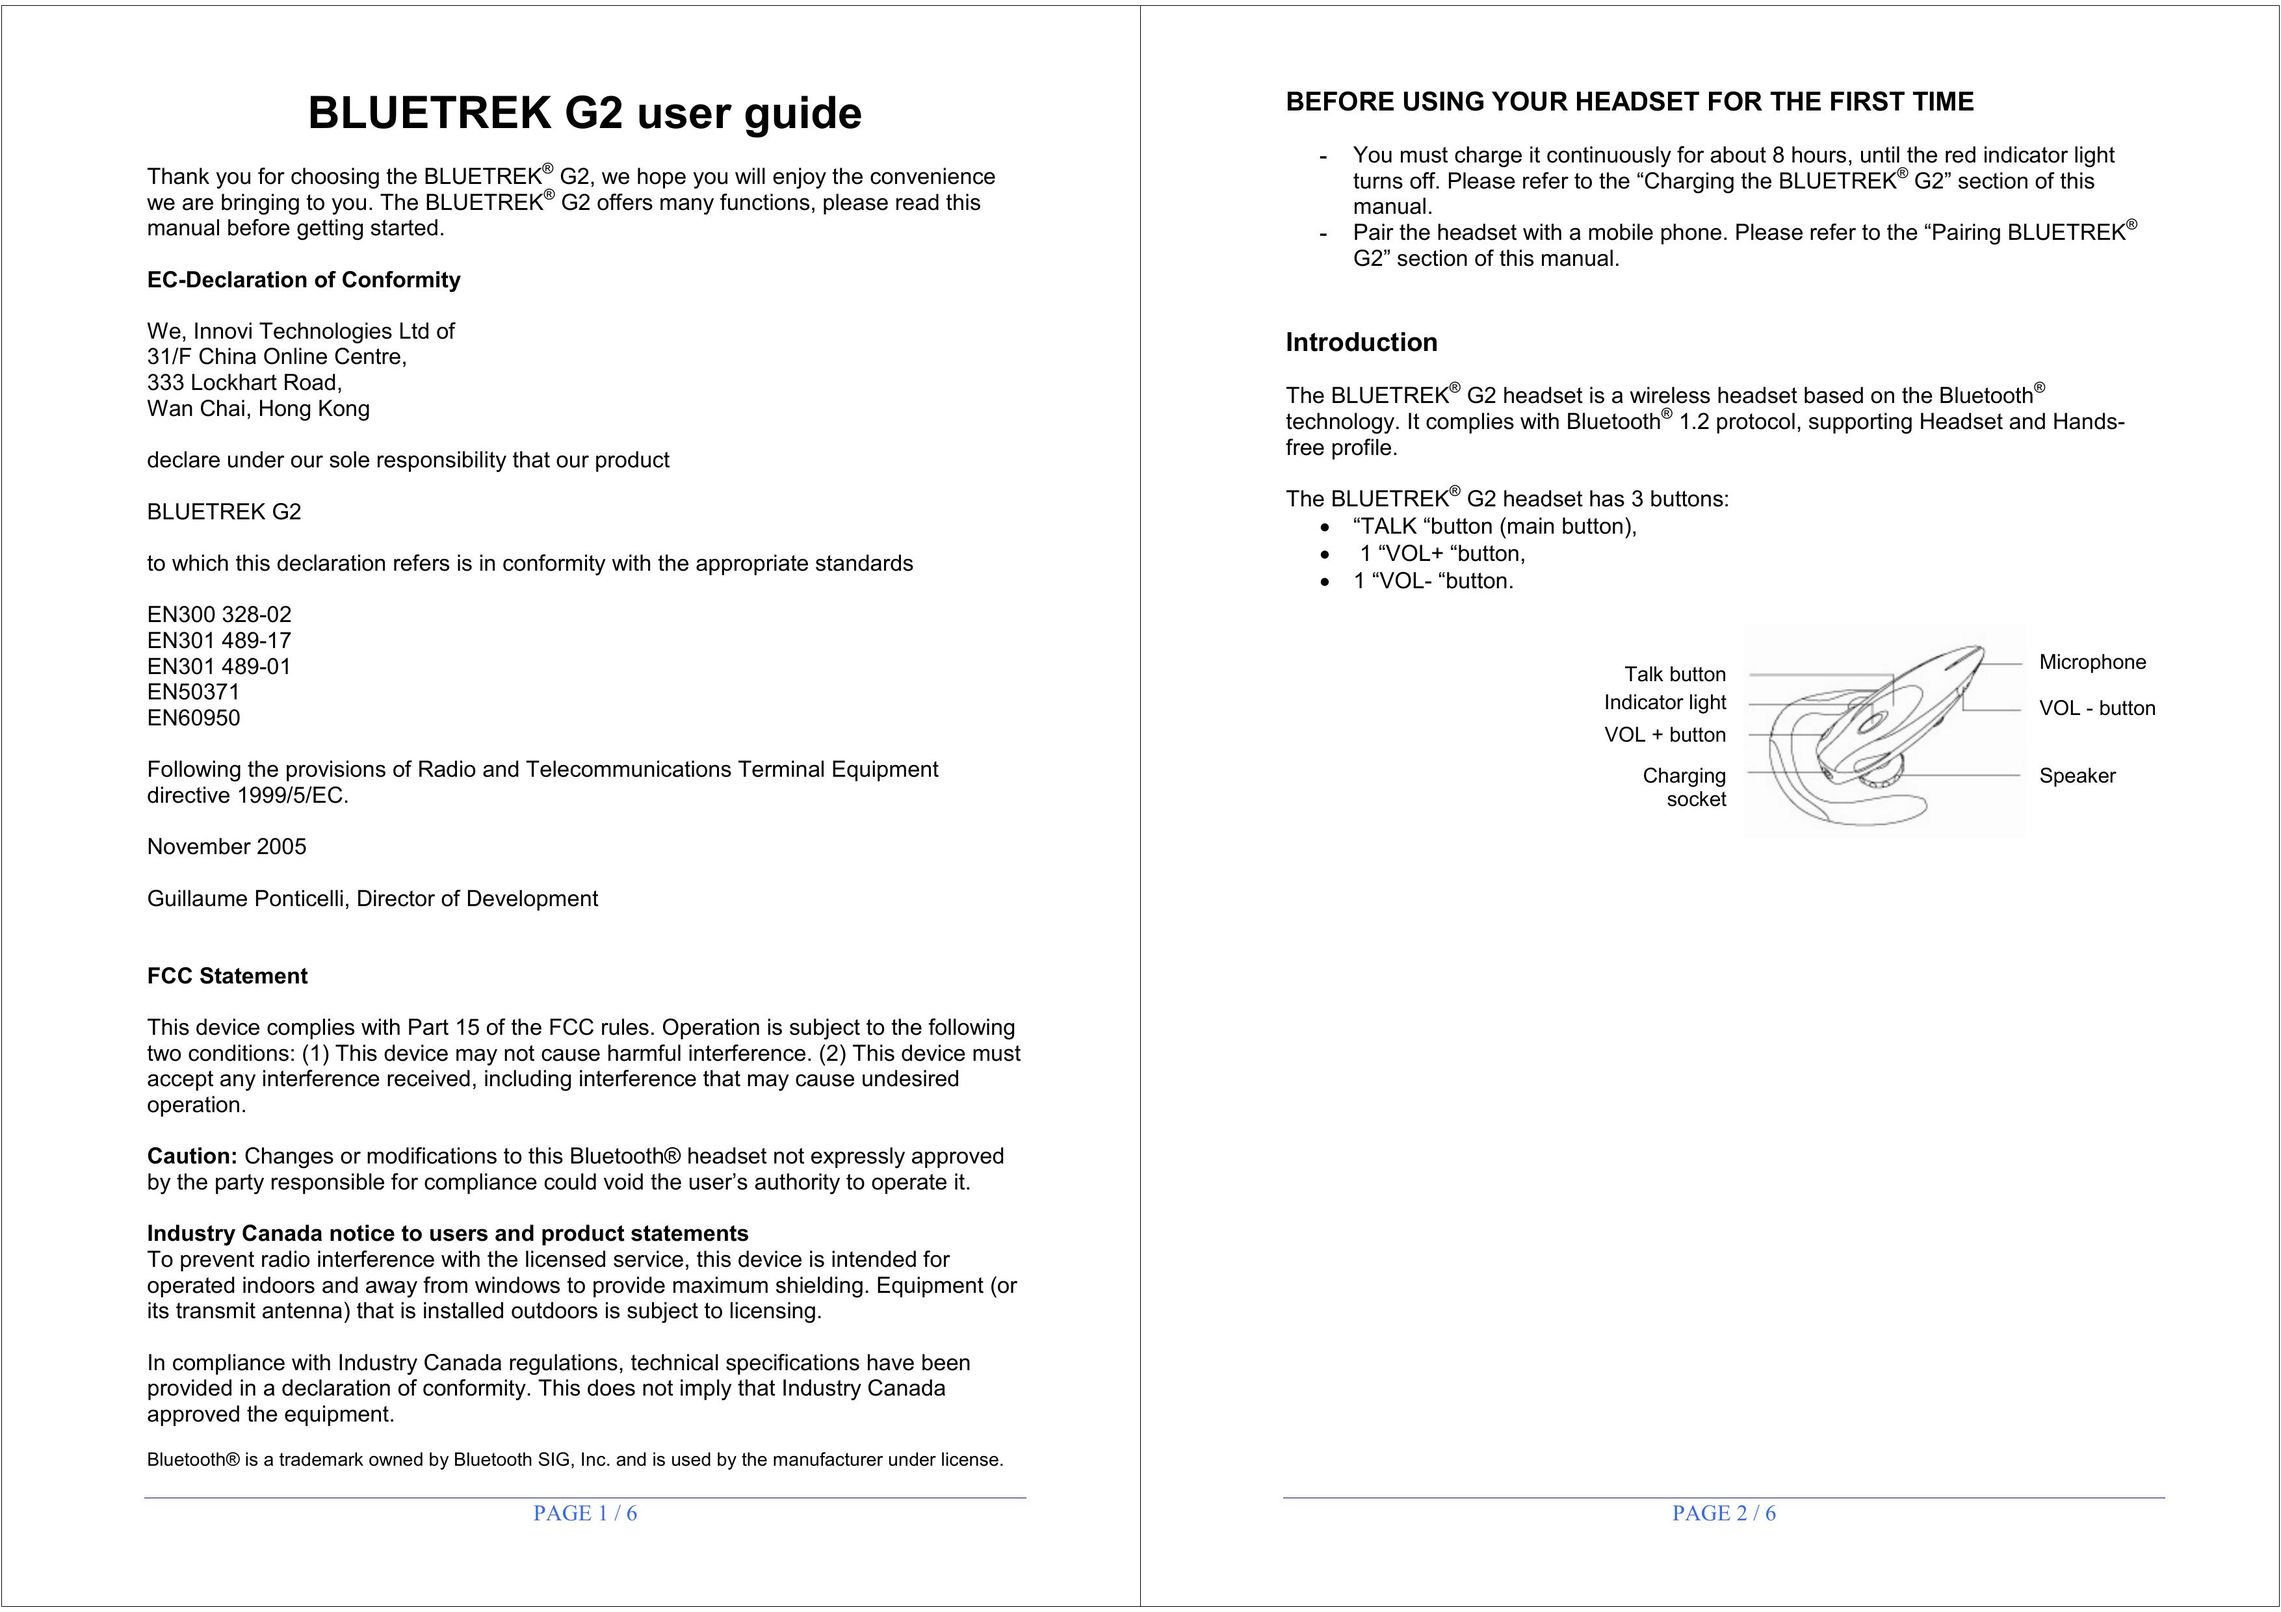 BlueTrek EN300 328-02 Bluetooth Headset User Manual